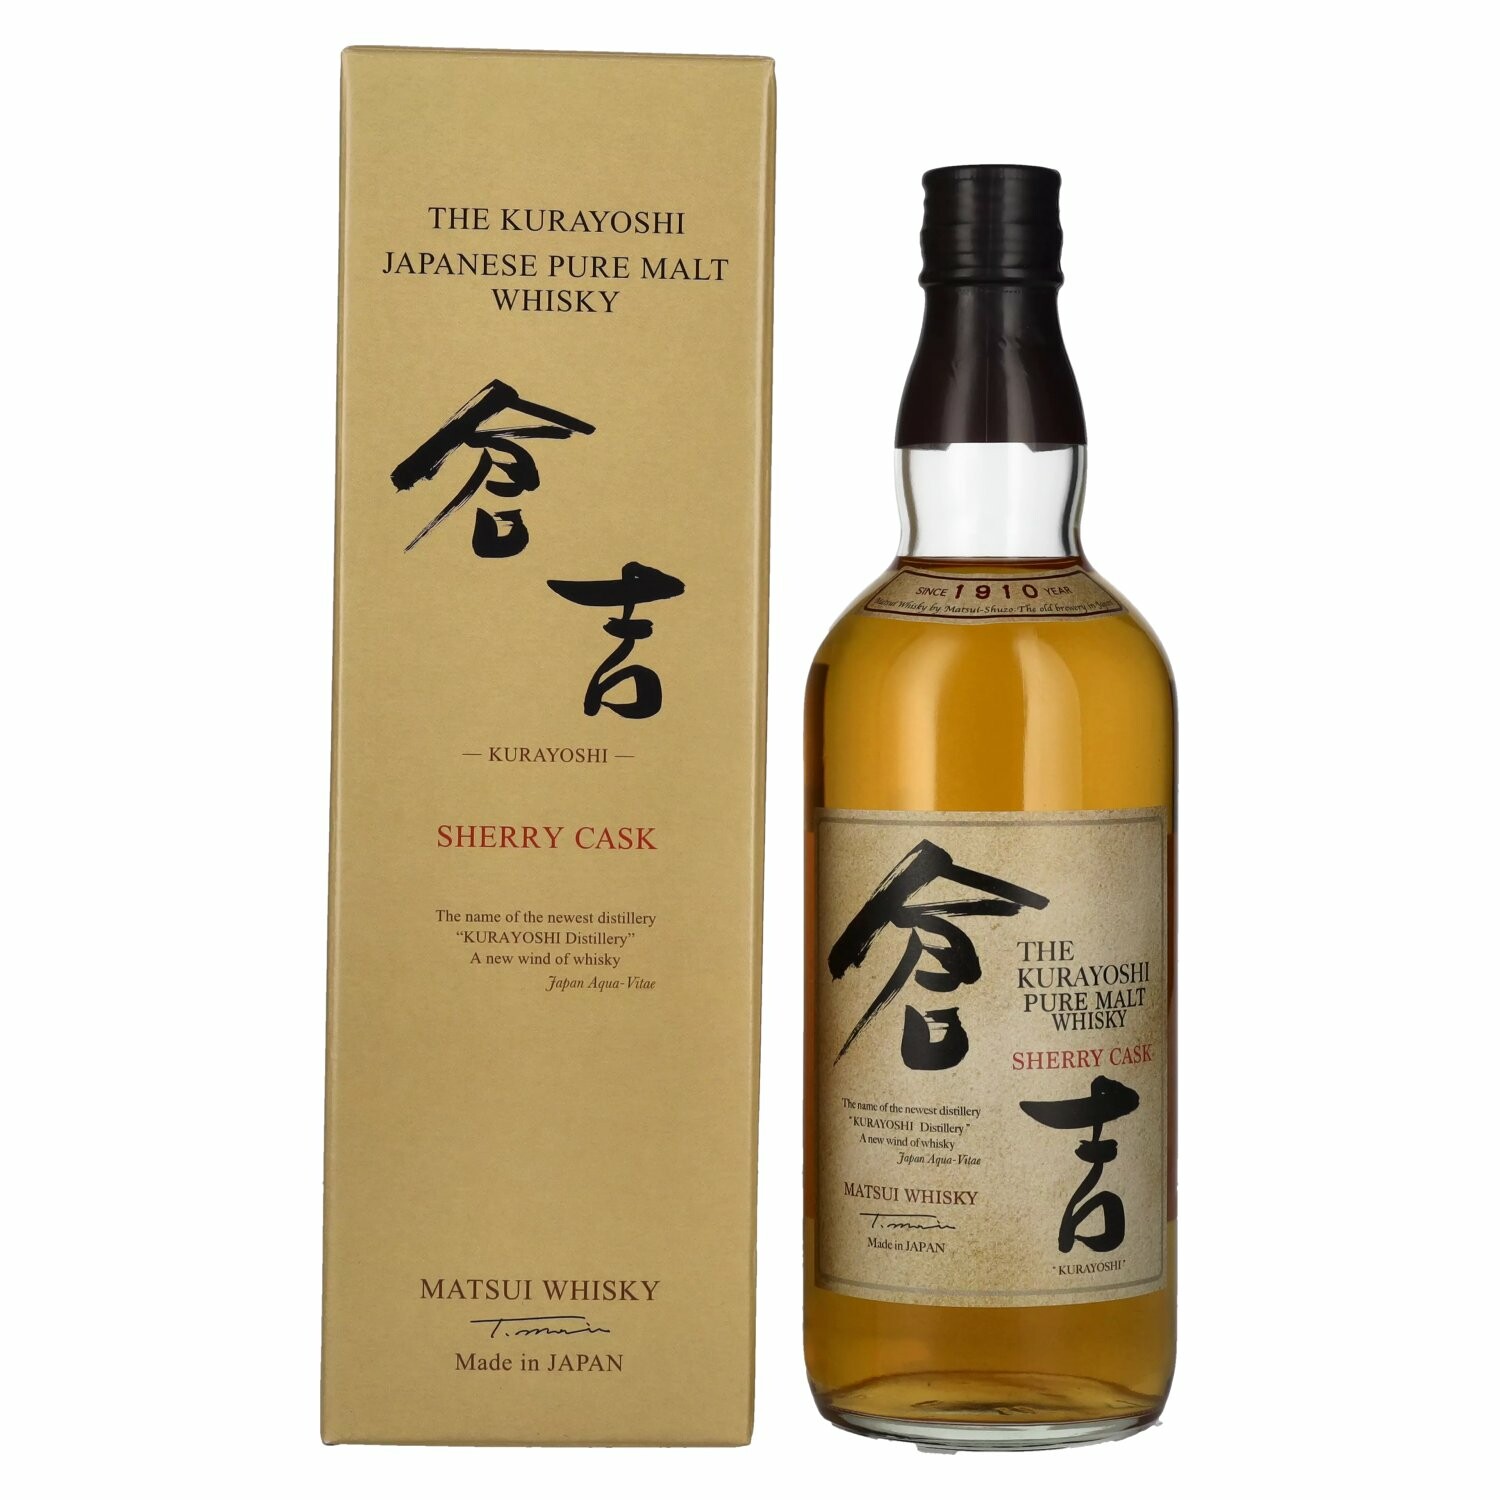 Matsui Whisky THE KURAYOSHI Pure Malt Whisky SHERRY CASK 43% Vol. 0,7l in Giftbox